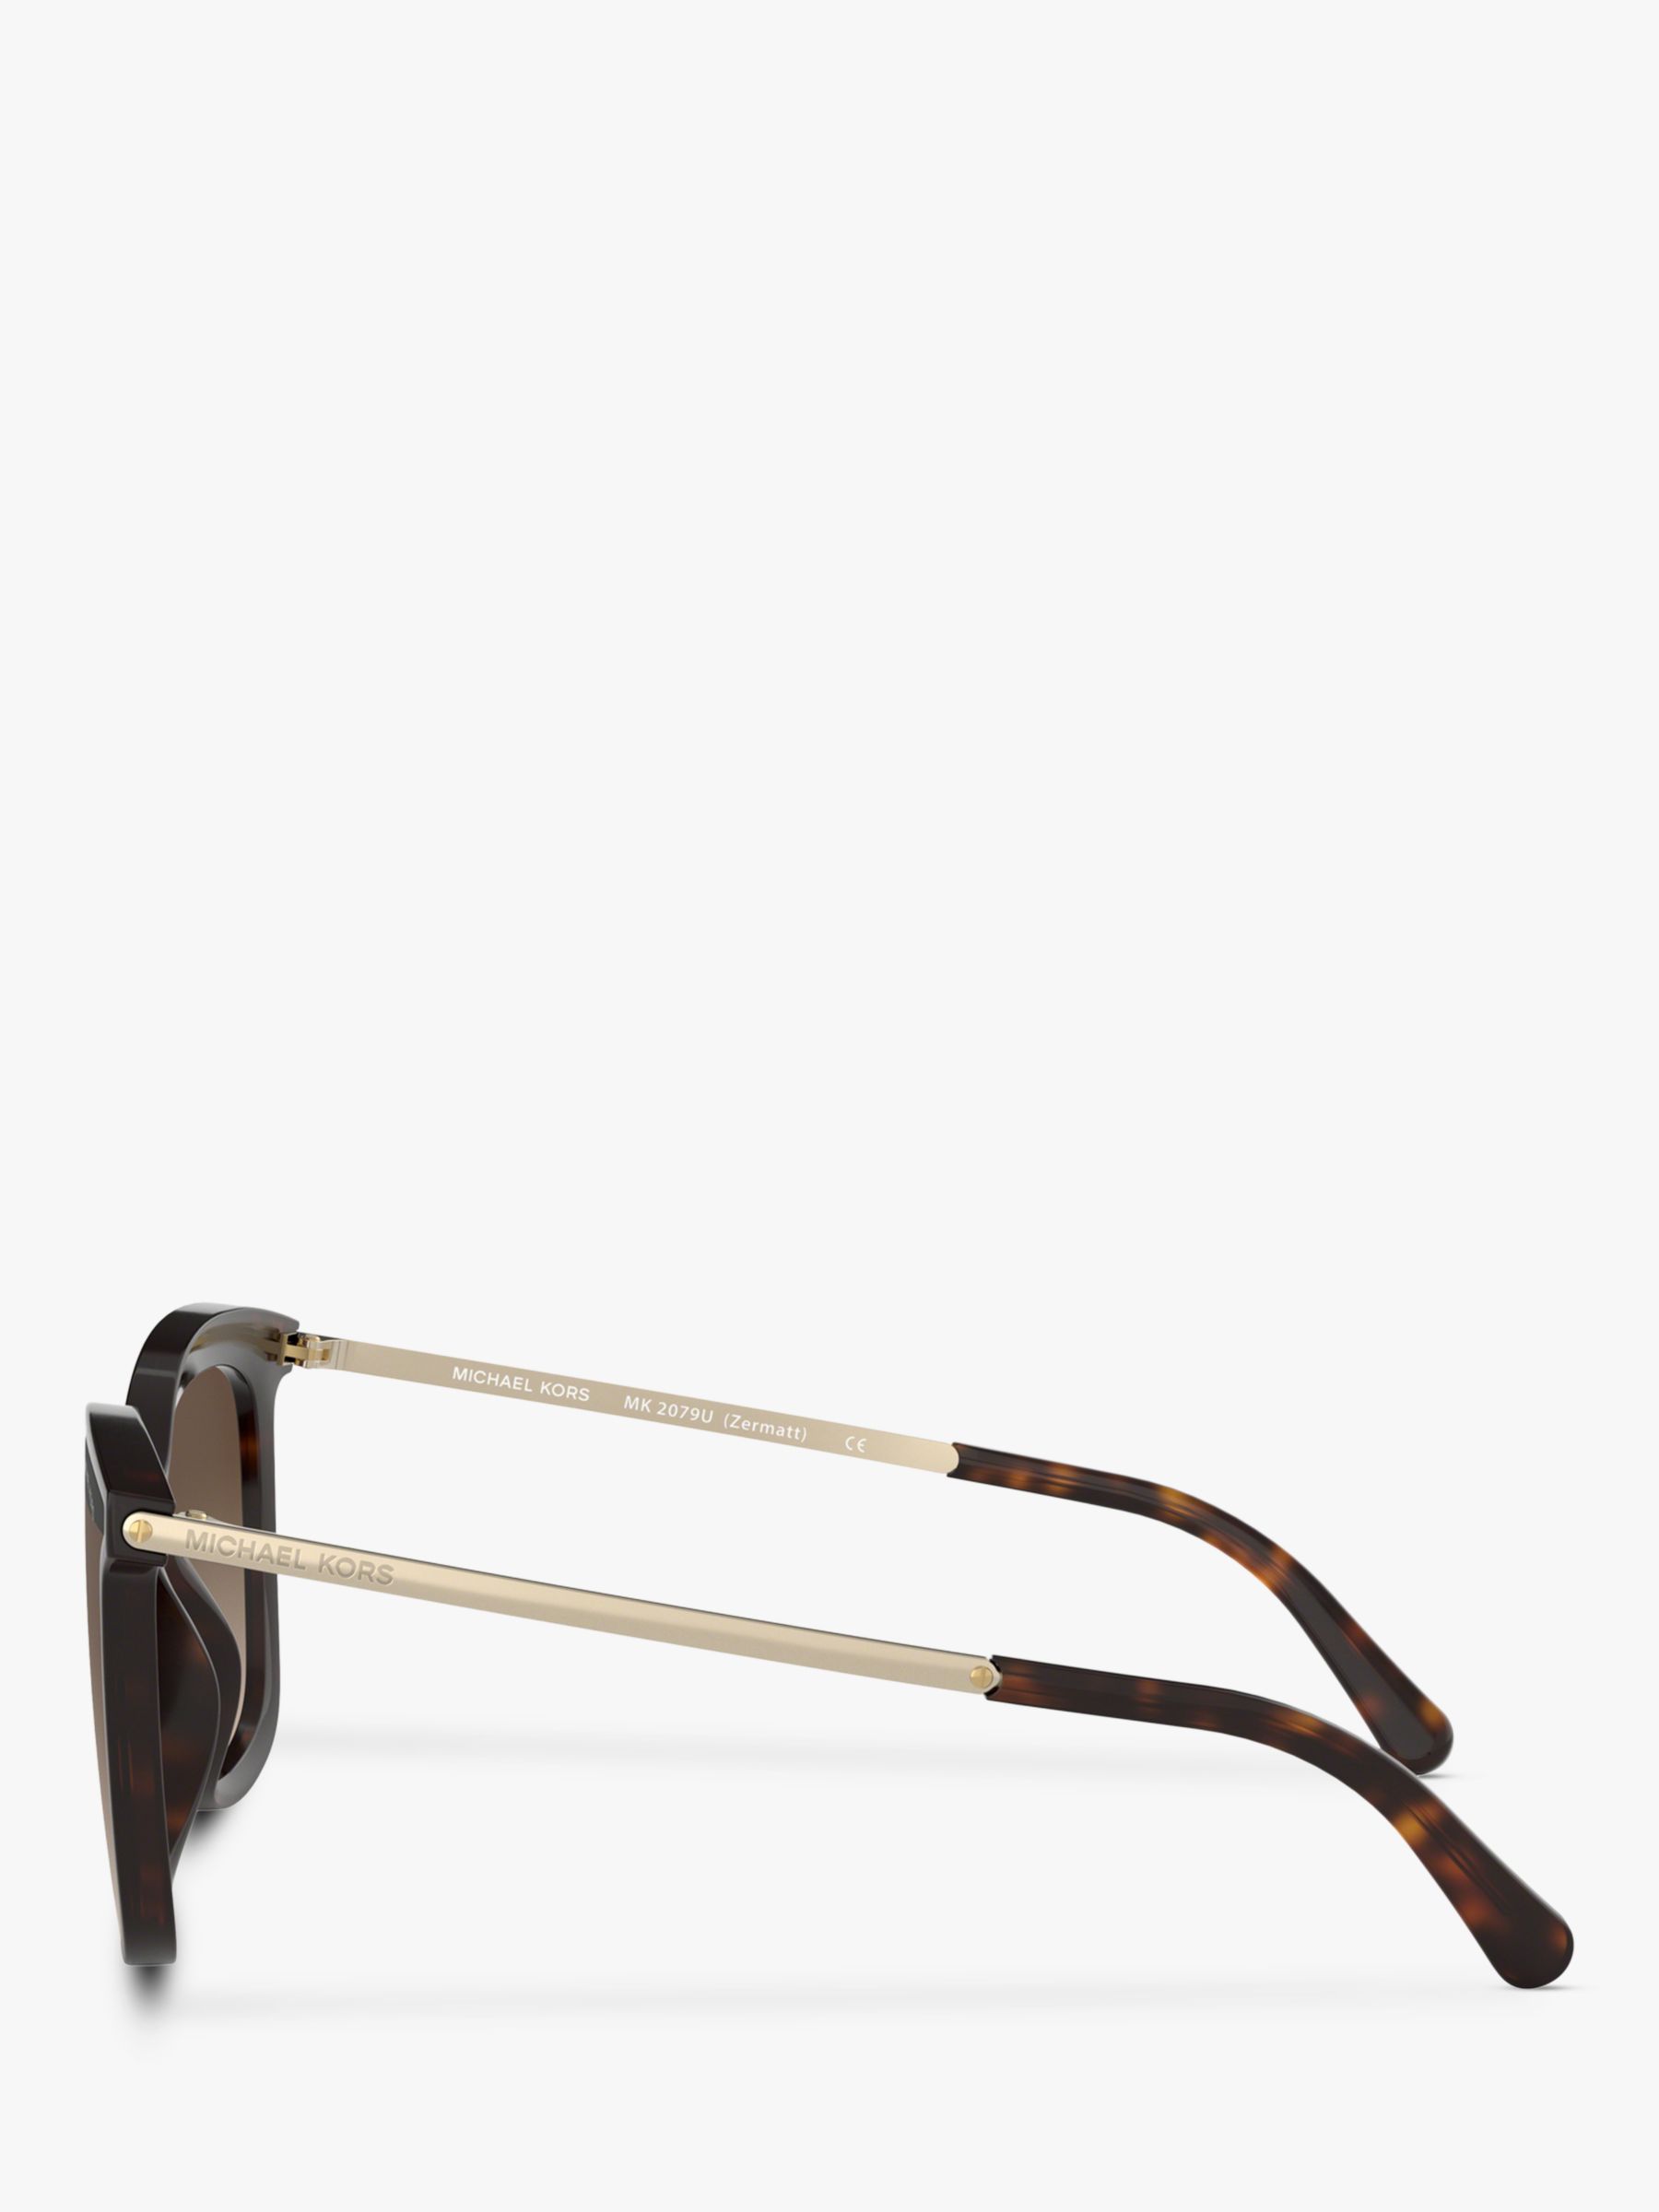 Michael Kors MK2079U Women's Zermatt Square Sunglasses, Dark Tortoise/Brown Gradient